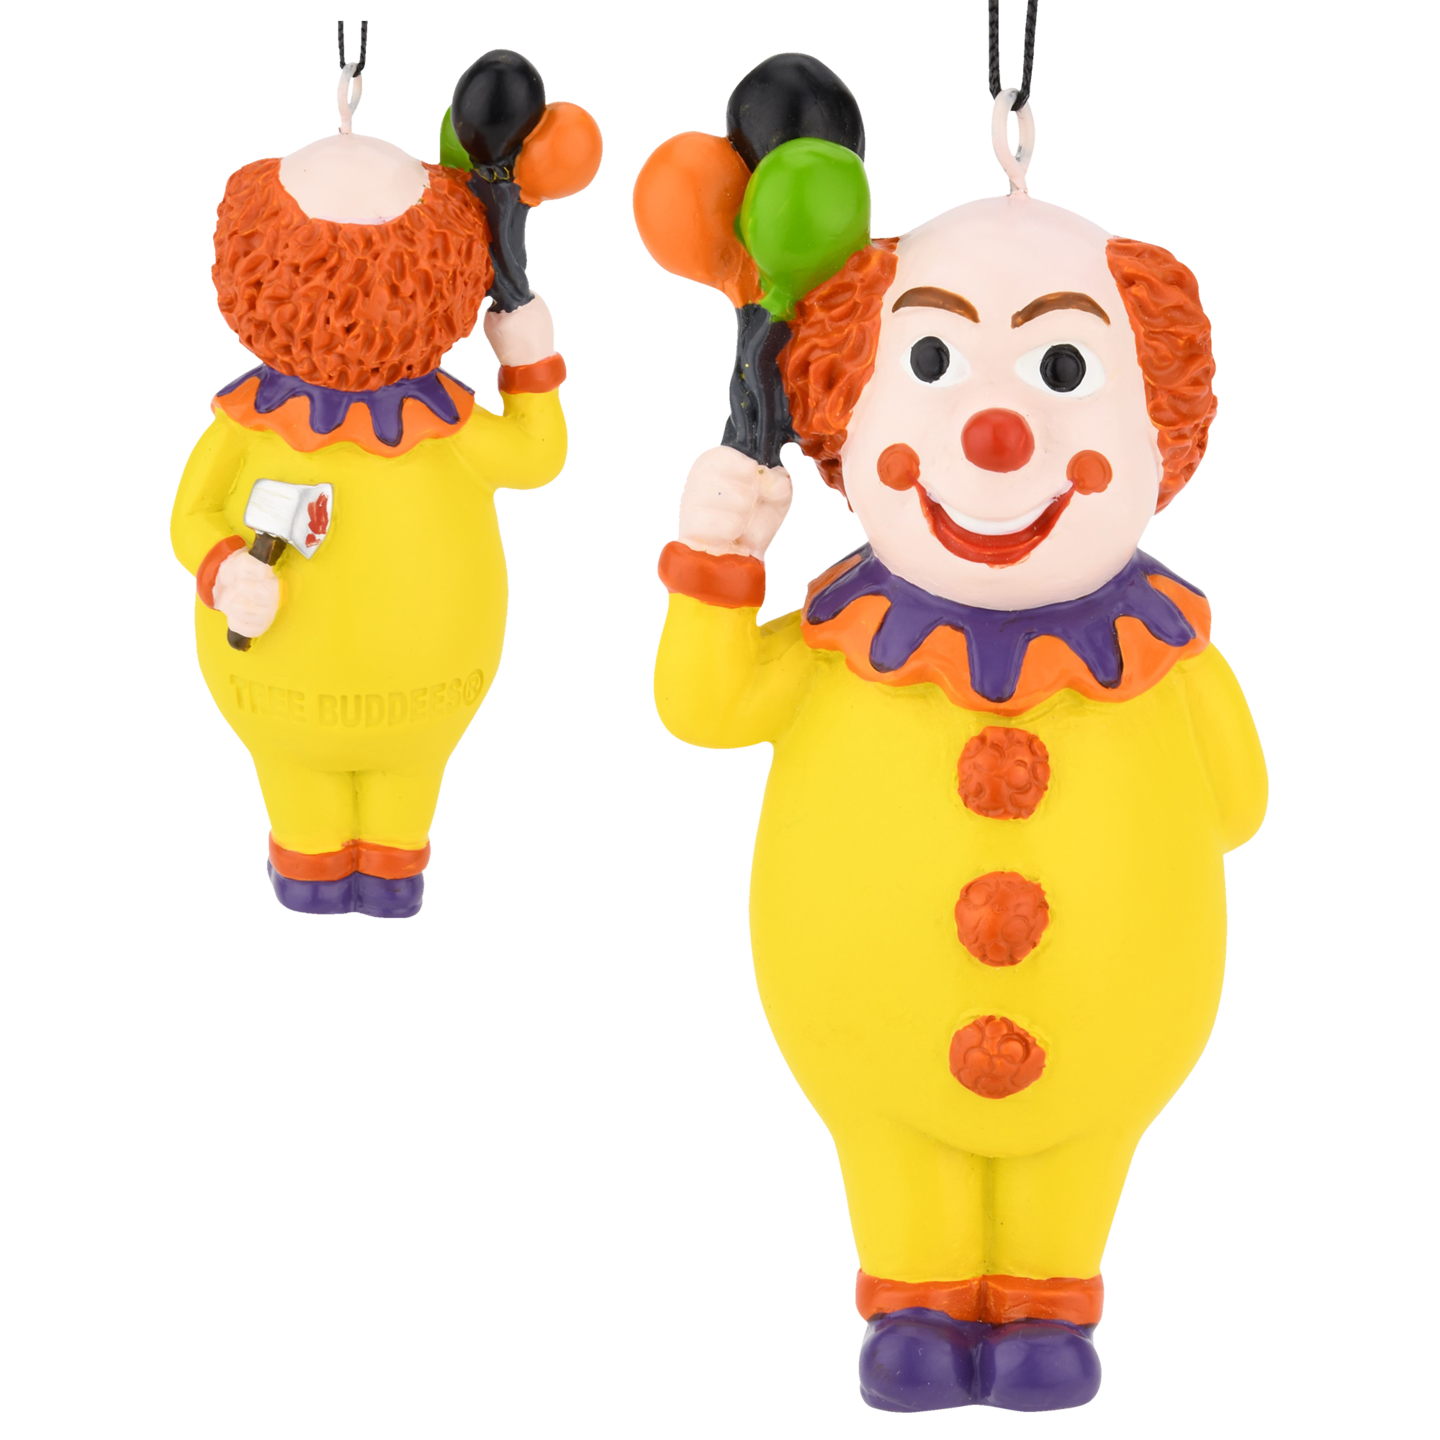 Creepy Clown Holding a Bloody Hatchet Halloween Ornament